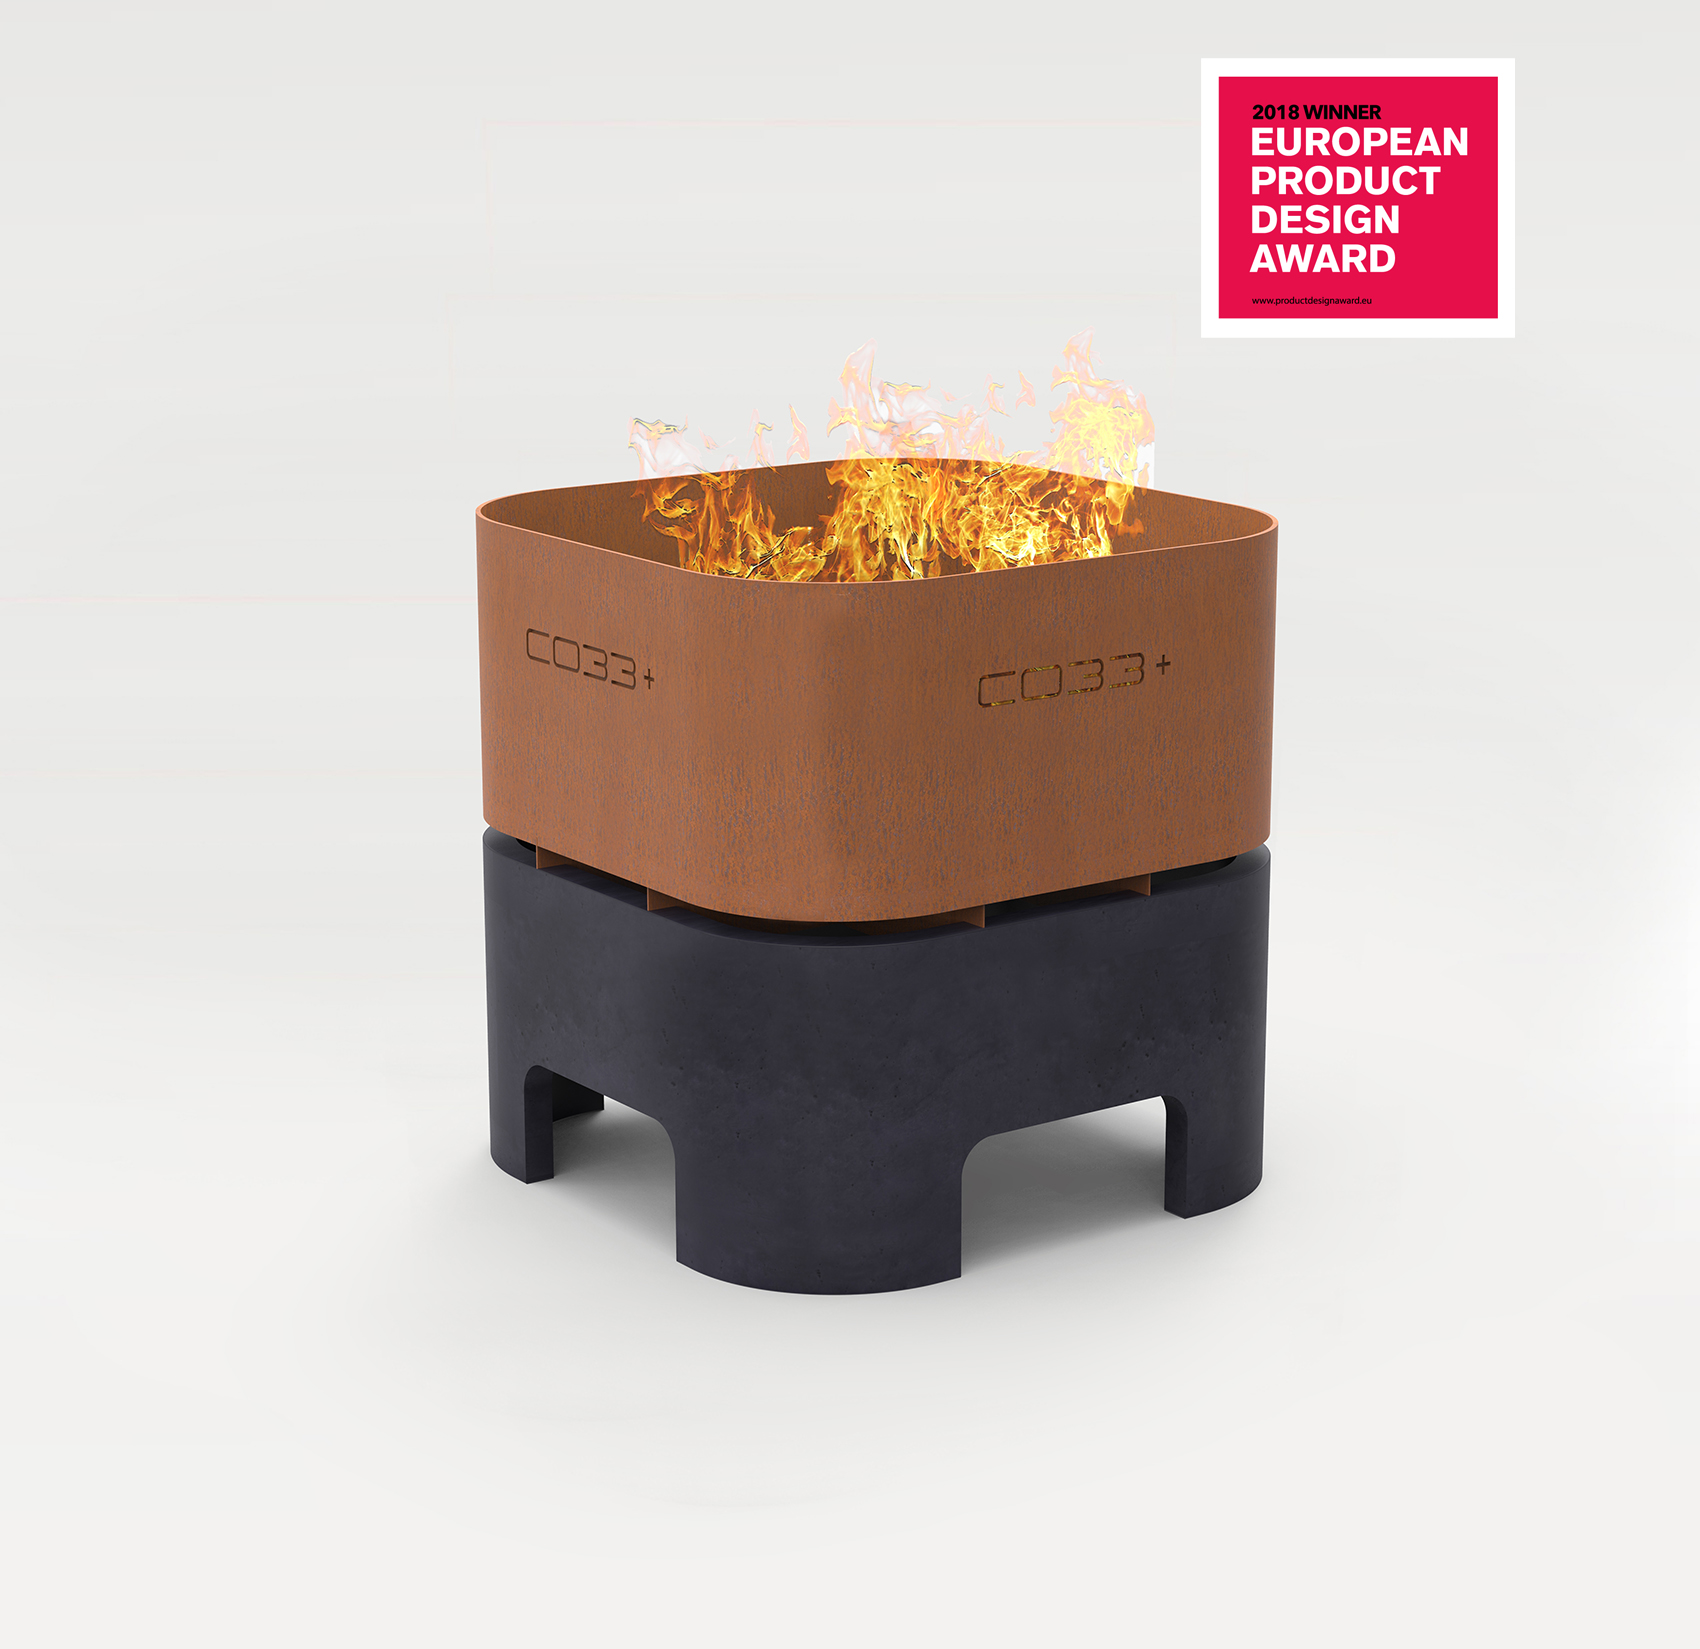 Anthracite concrete and Corten steel fire bowl, gold design award winner